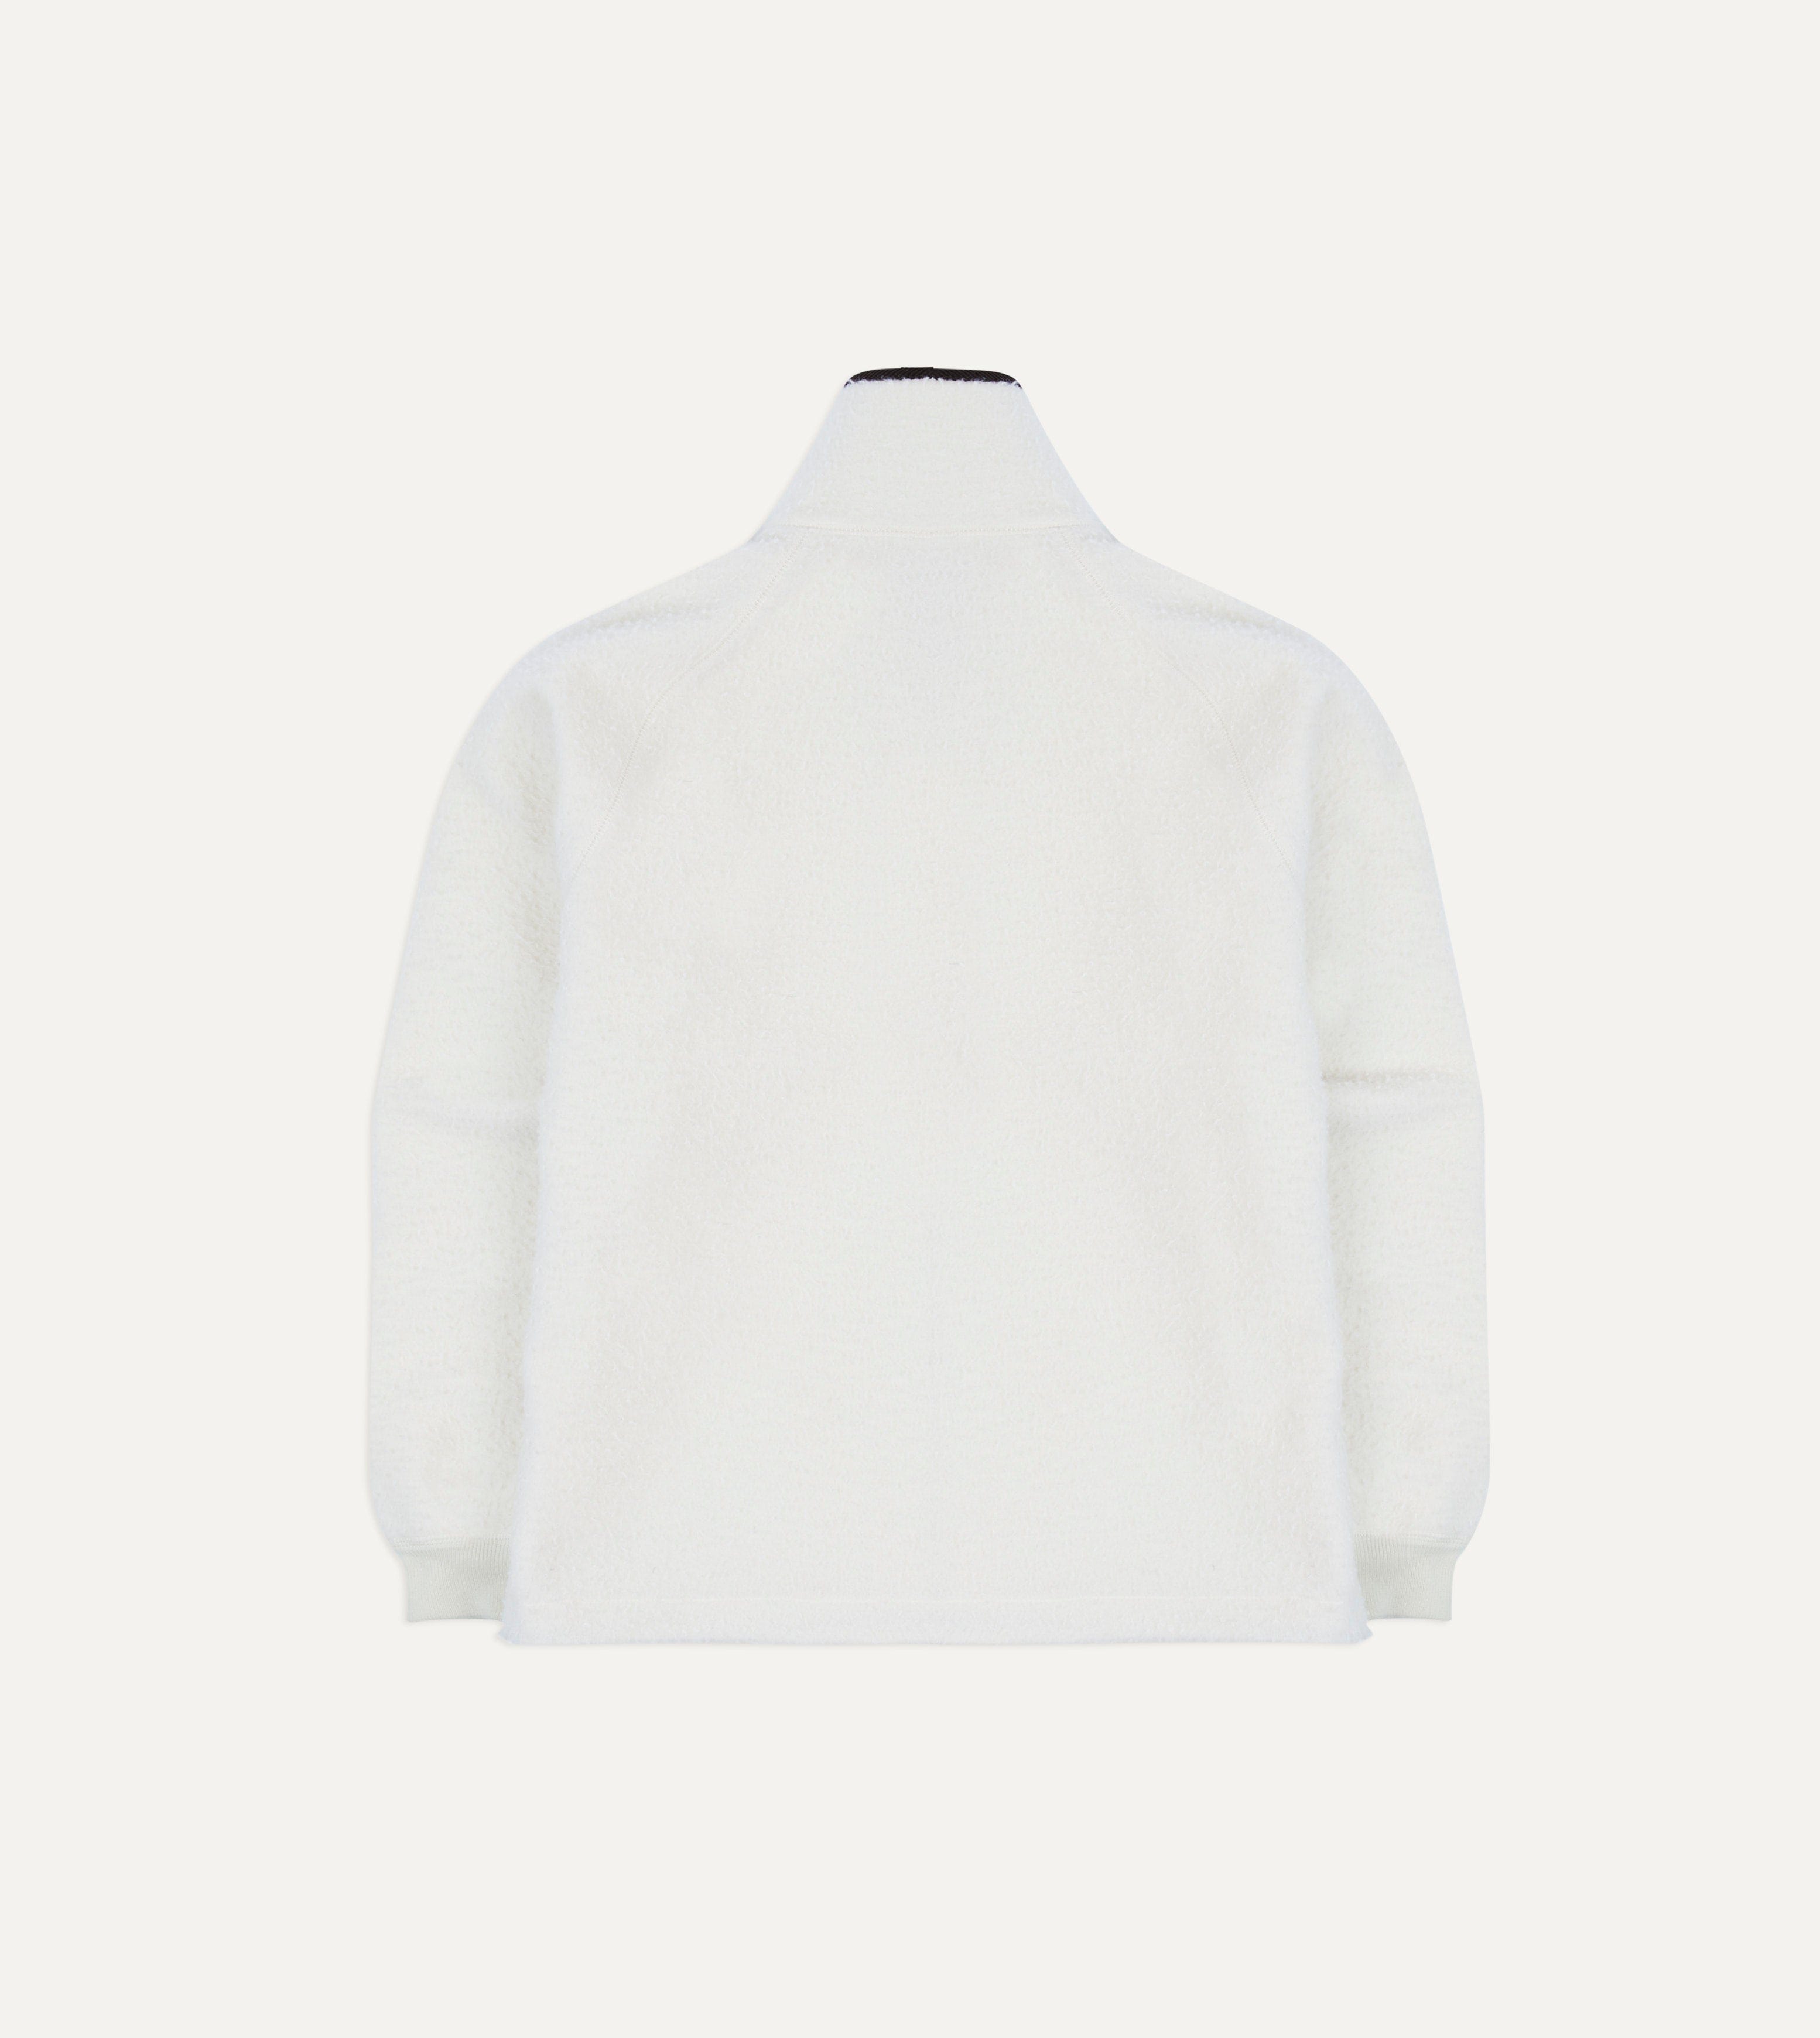 ALD / Drake's Casentino Wool Full Zip Fleece Jacket – Drakes